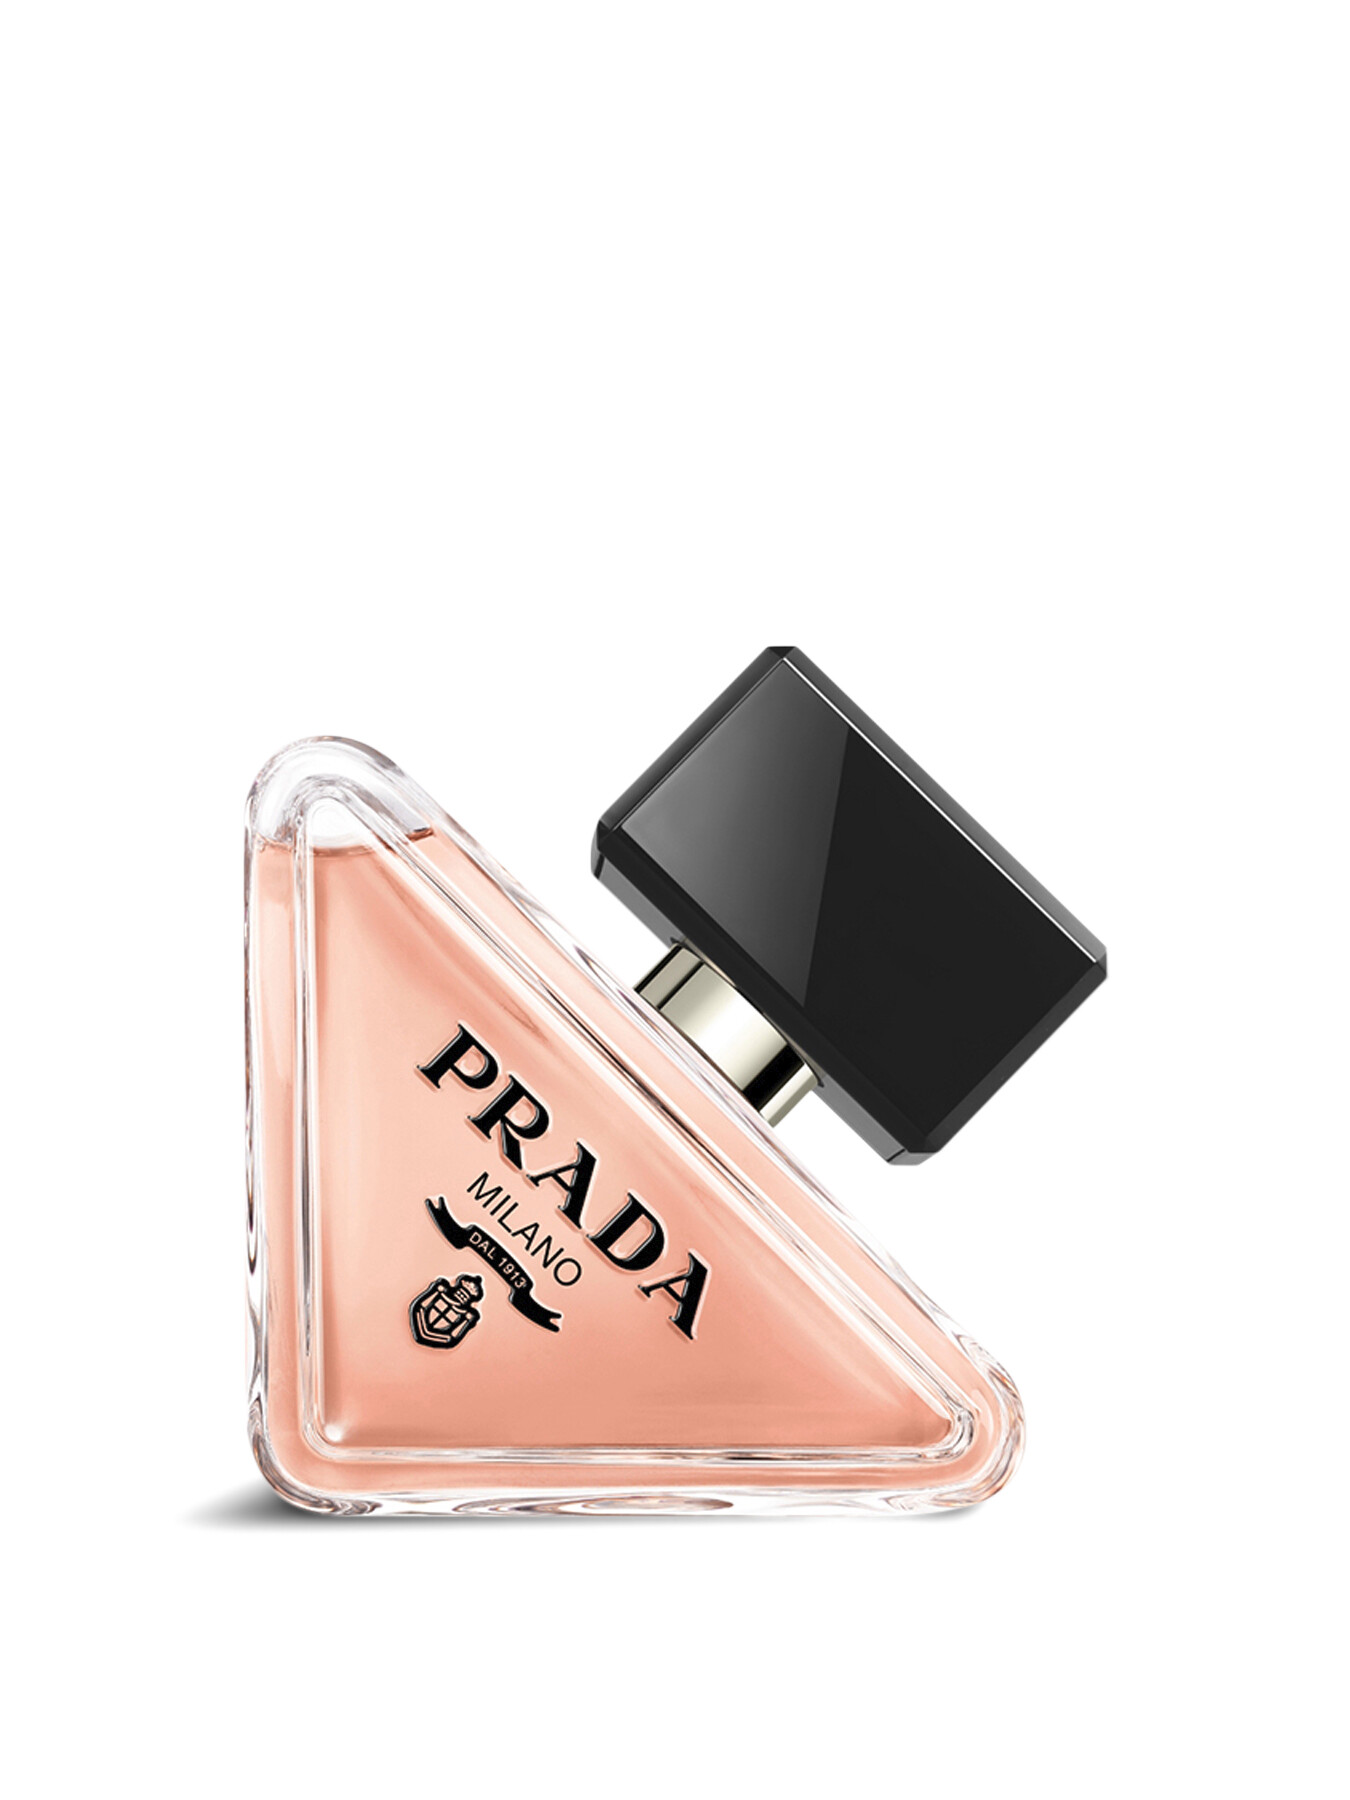 Prada Paradoxe Eau de Parfum 50ml, Women's Fragrances